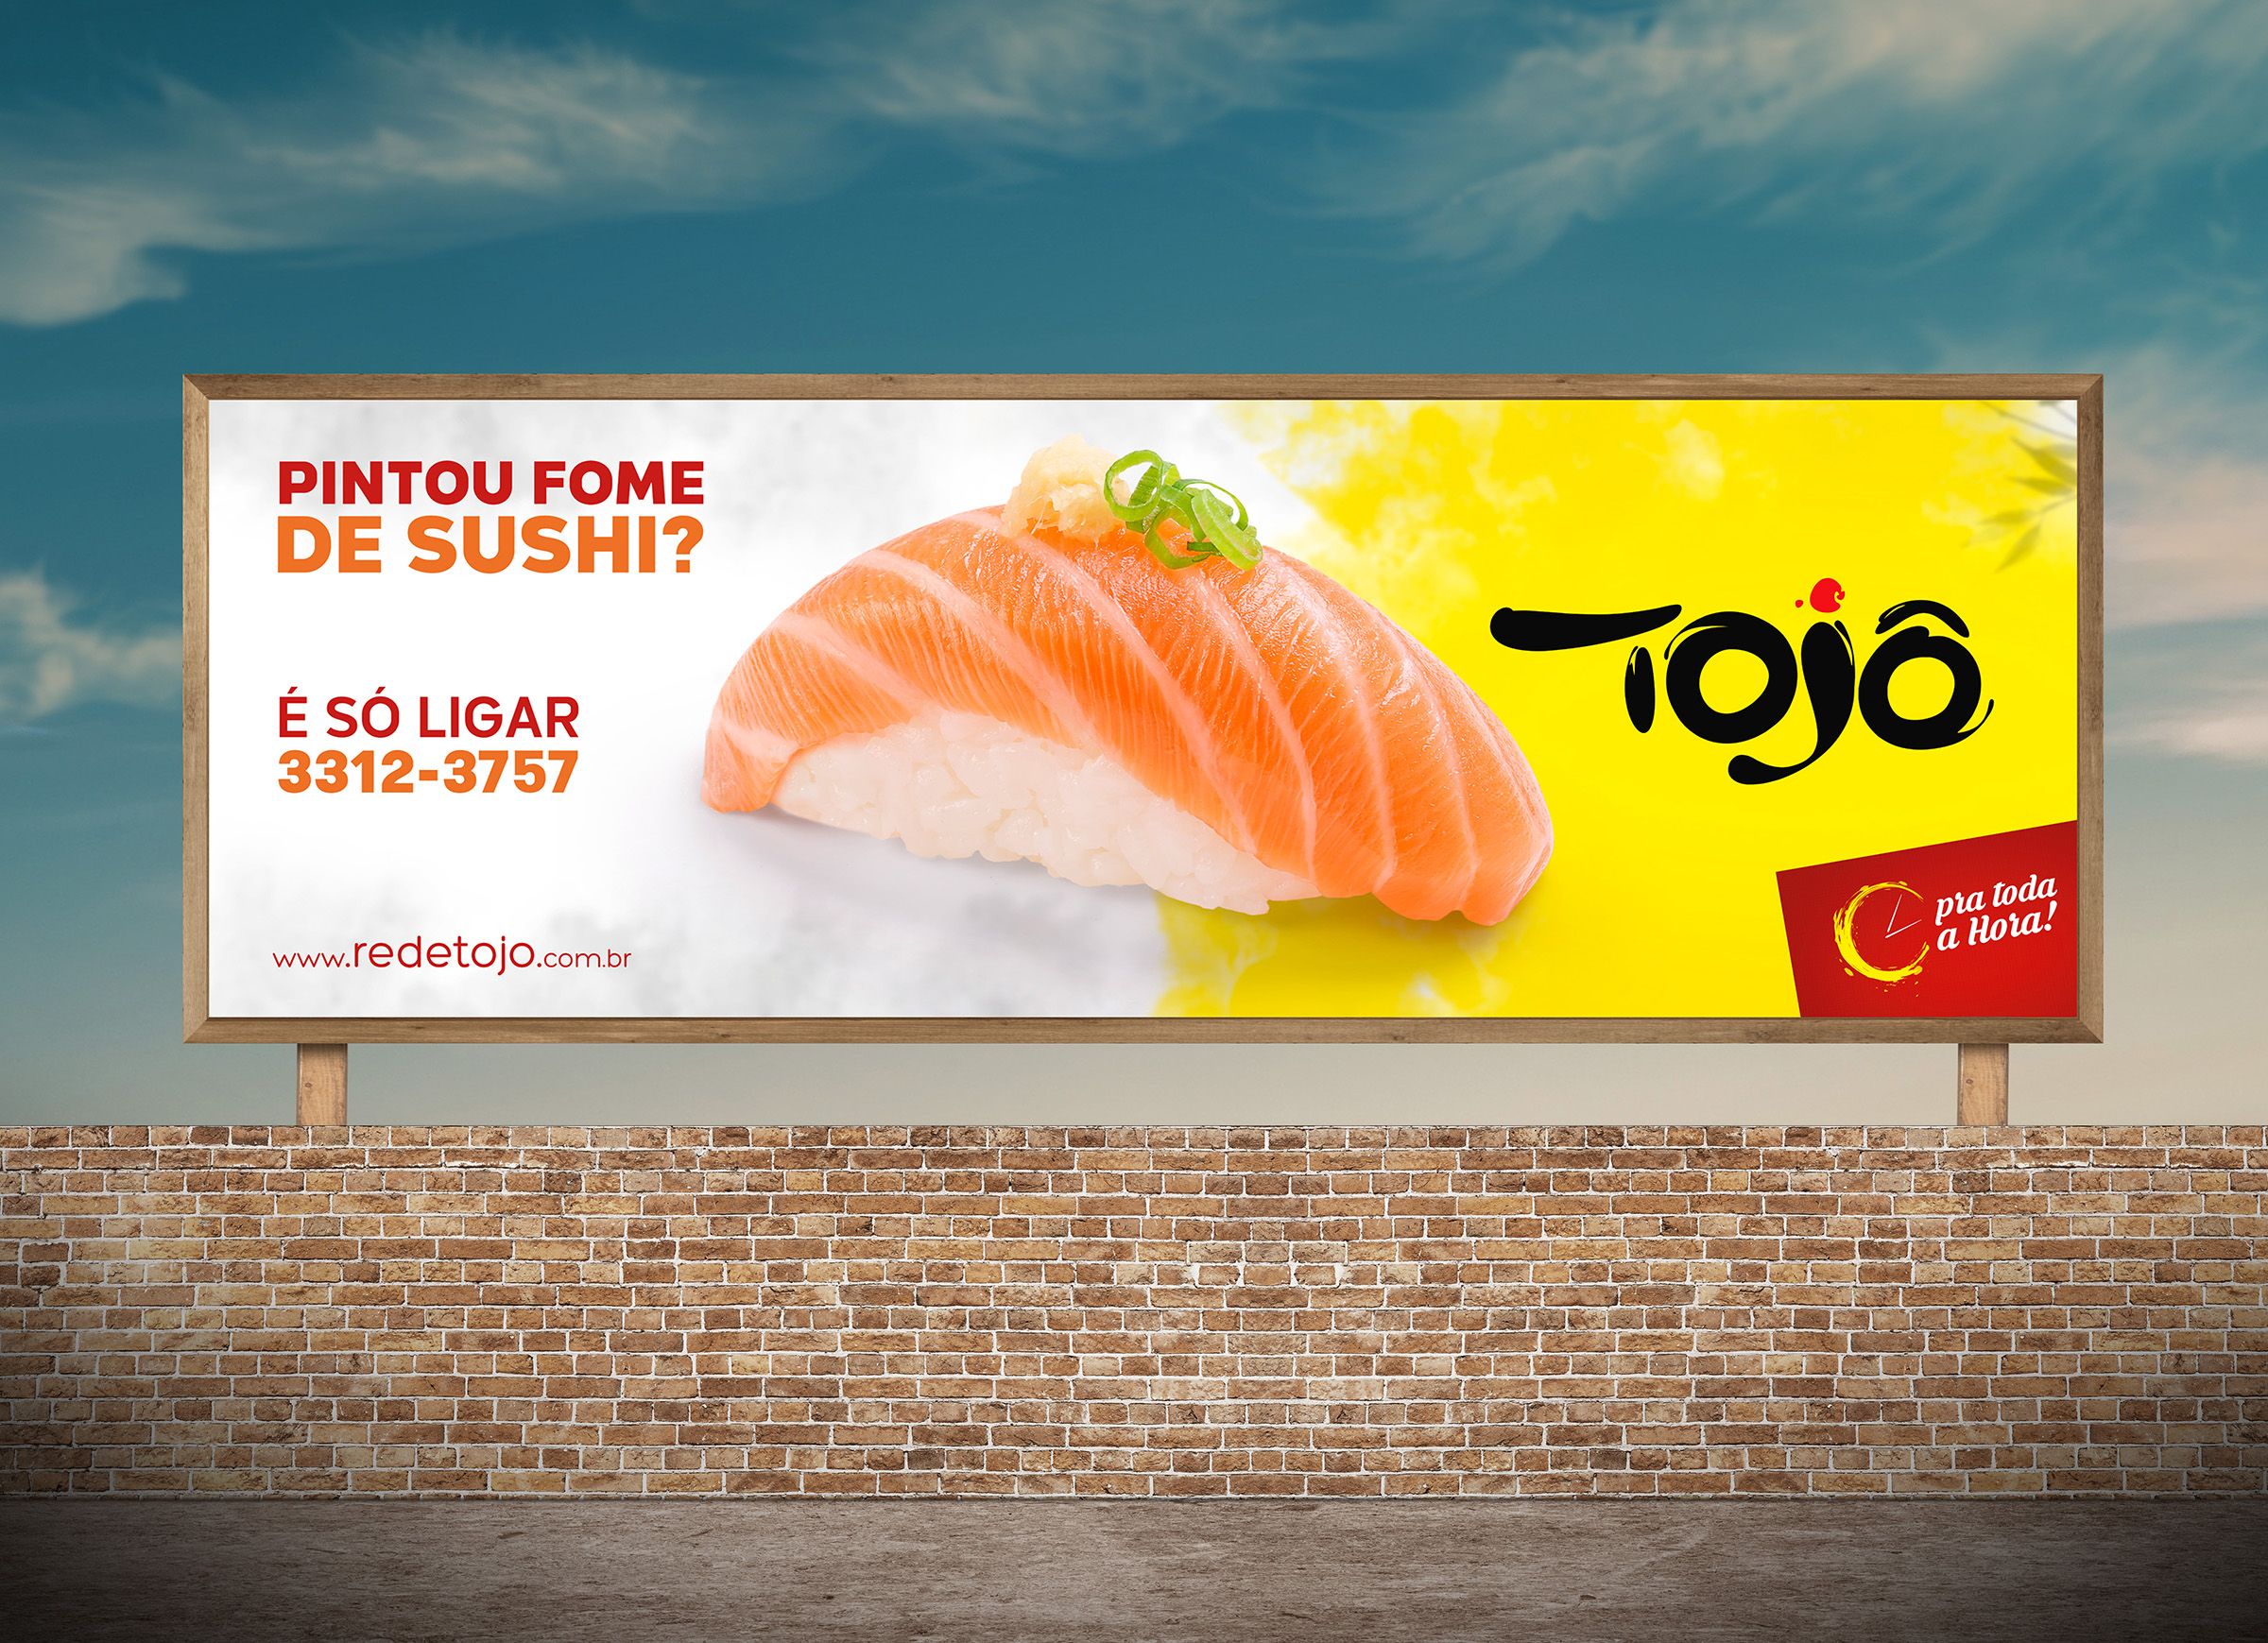 Tojo Cardápio - Comida Oriental - Comida Japonesa - Sushi - Agência de Propaganda